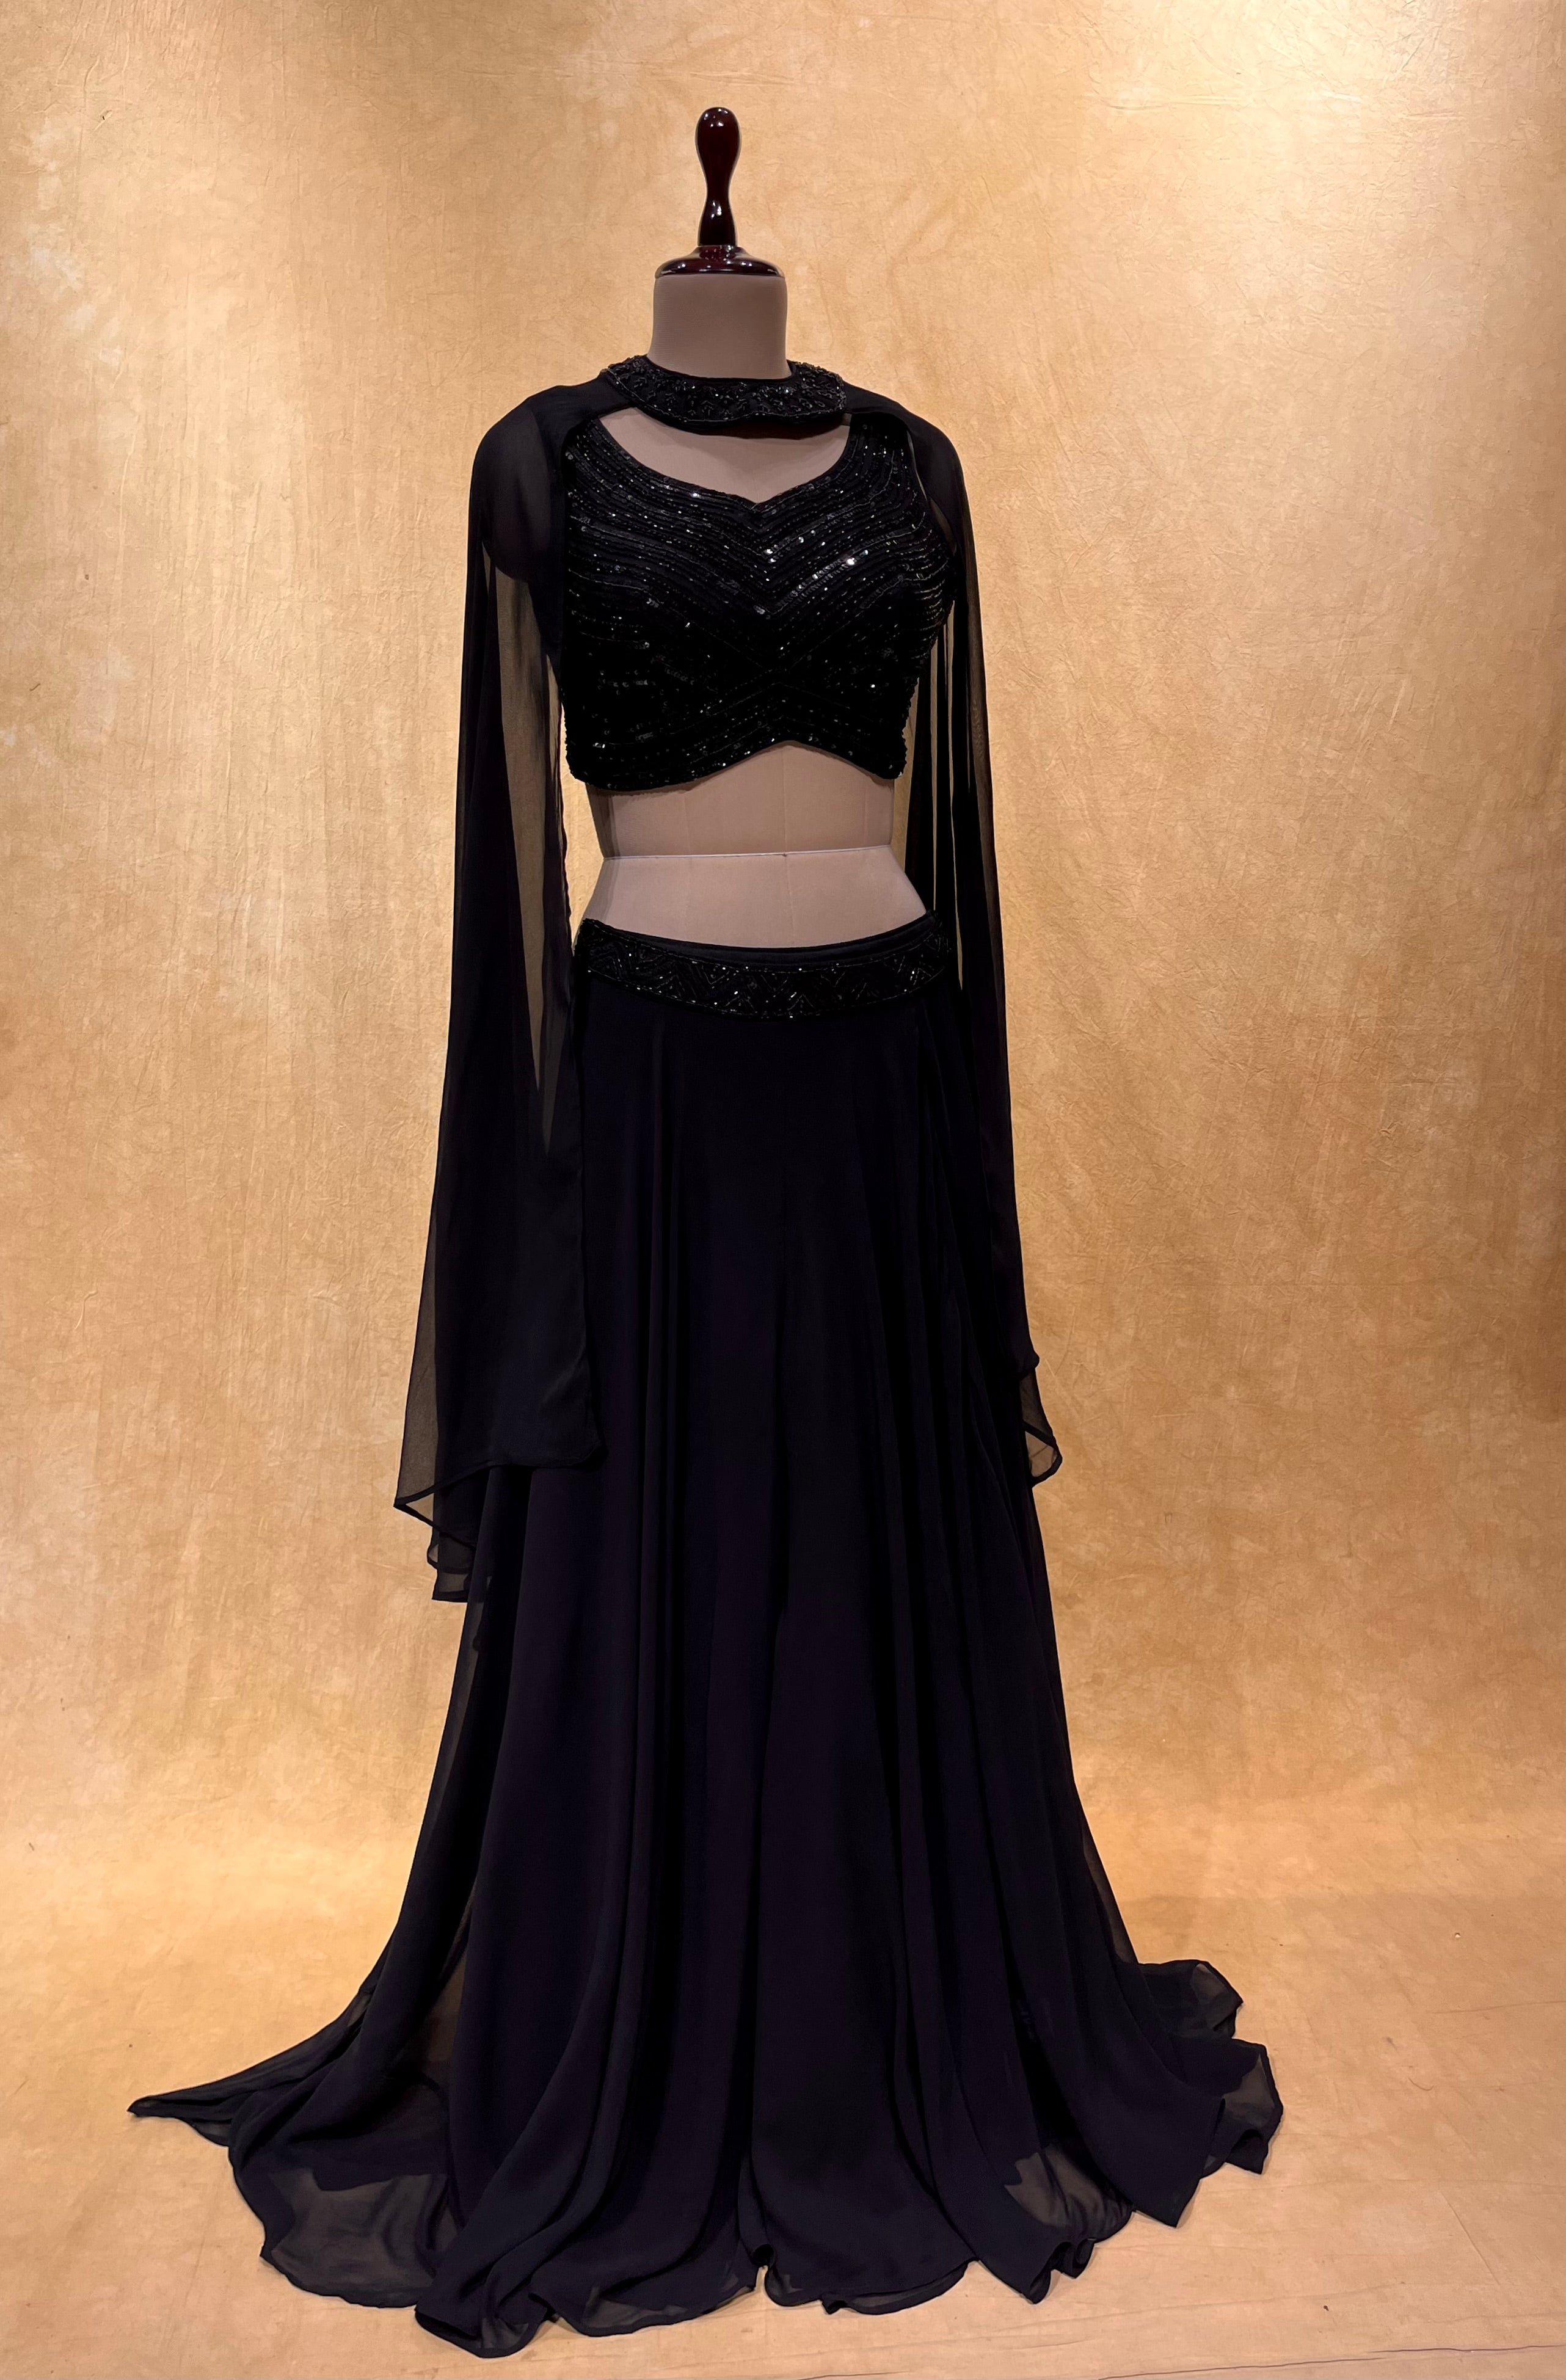 Buy Aurel Georgatte Designer Long One Piece Dress ASP47 Black Colour Size  Medium at Amazon.in